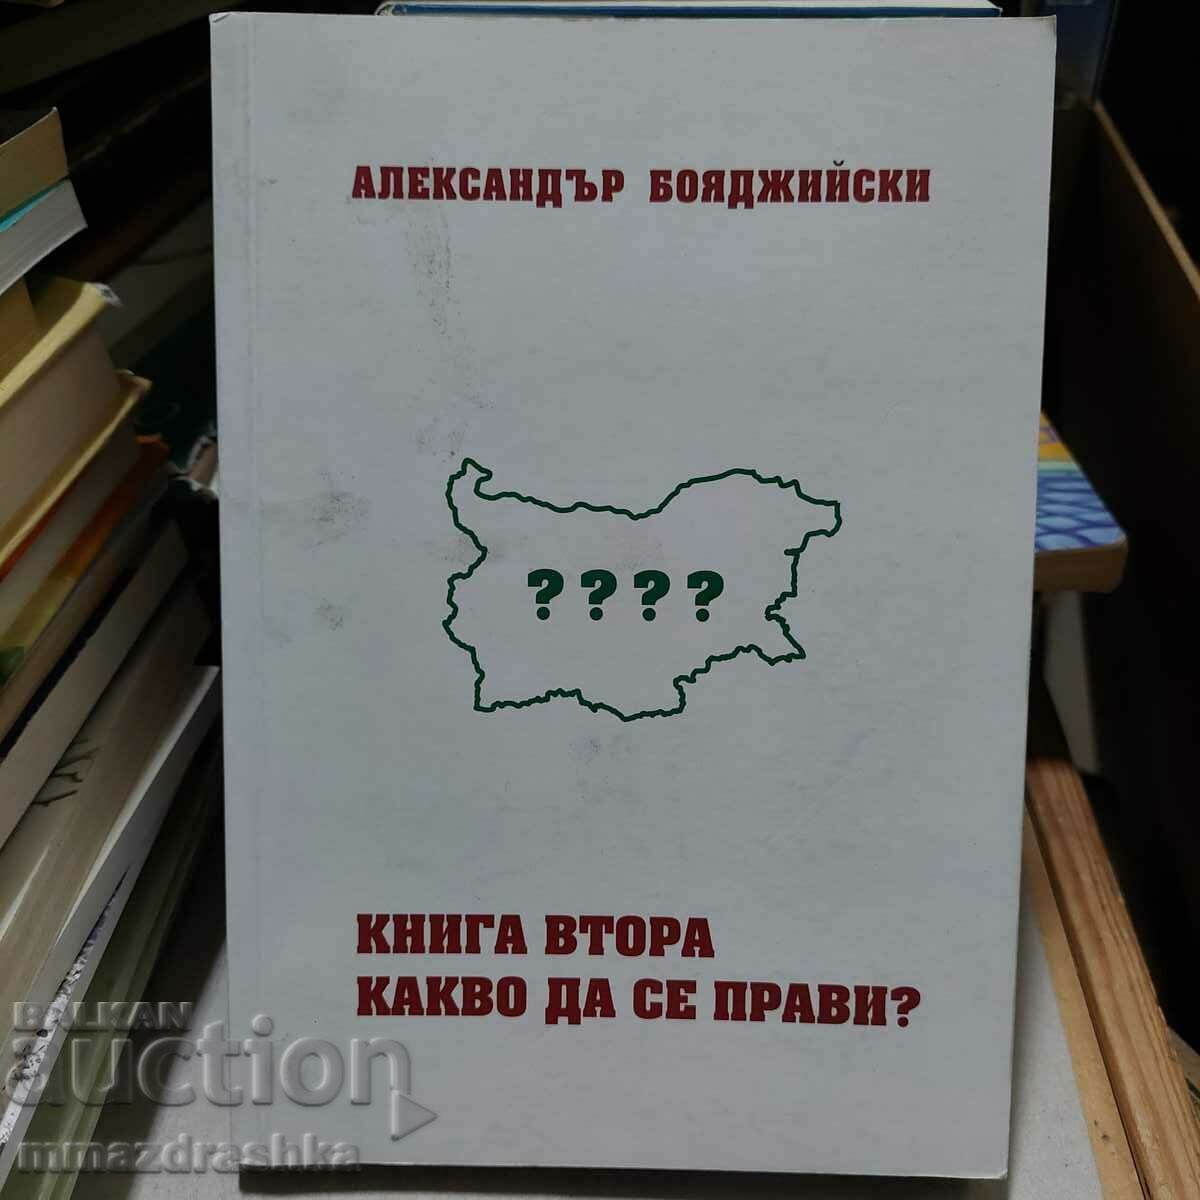 Book two What to do, Alexander Boyadzhiyski